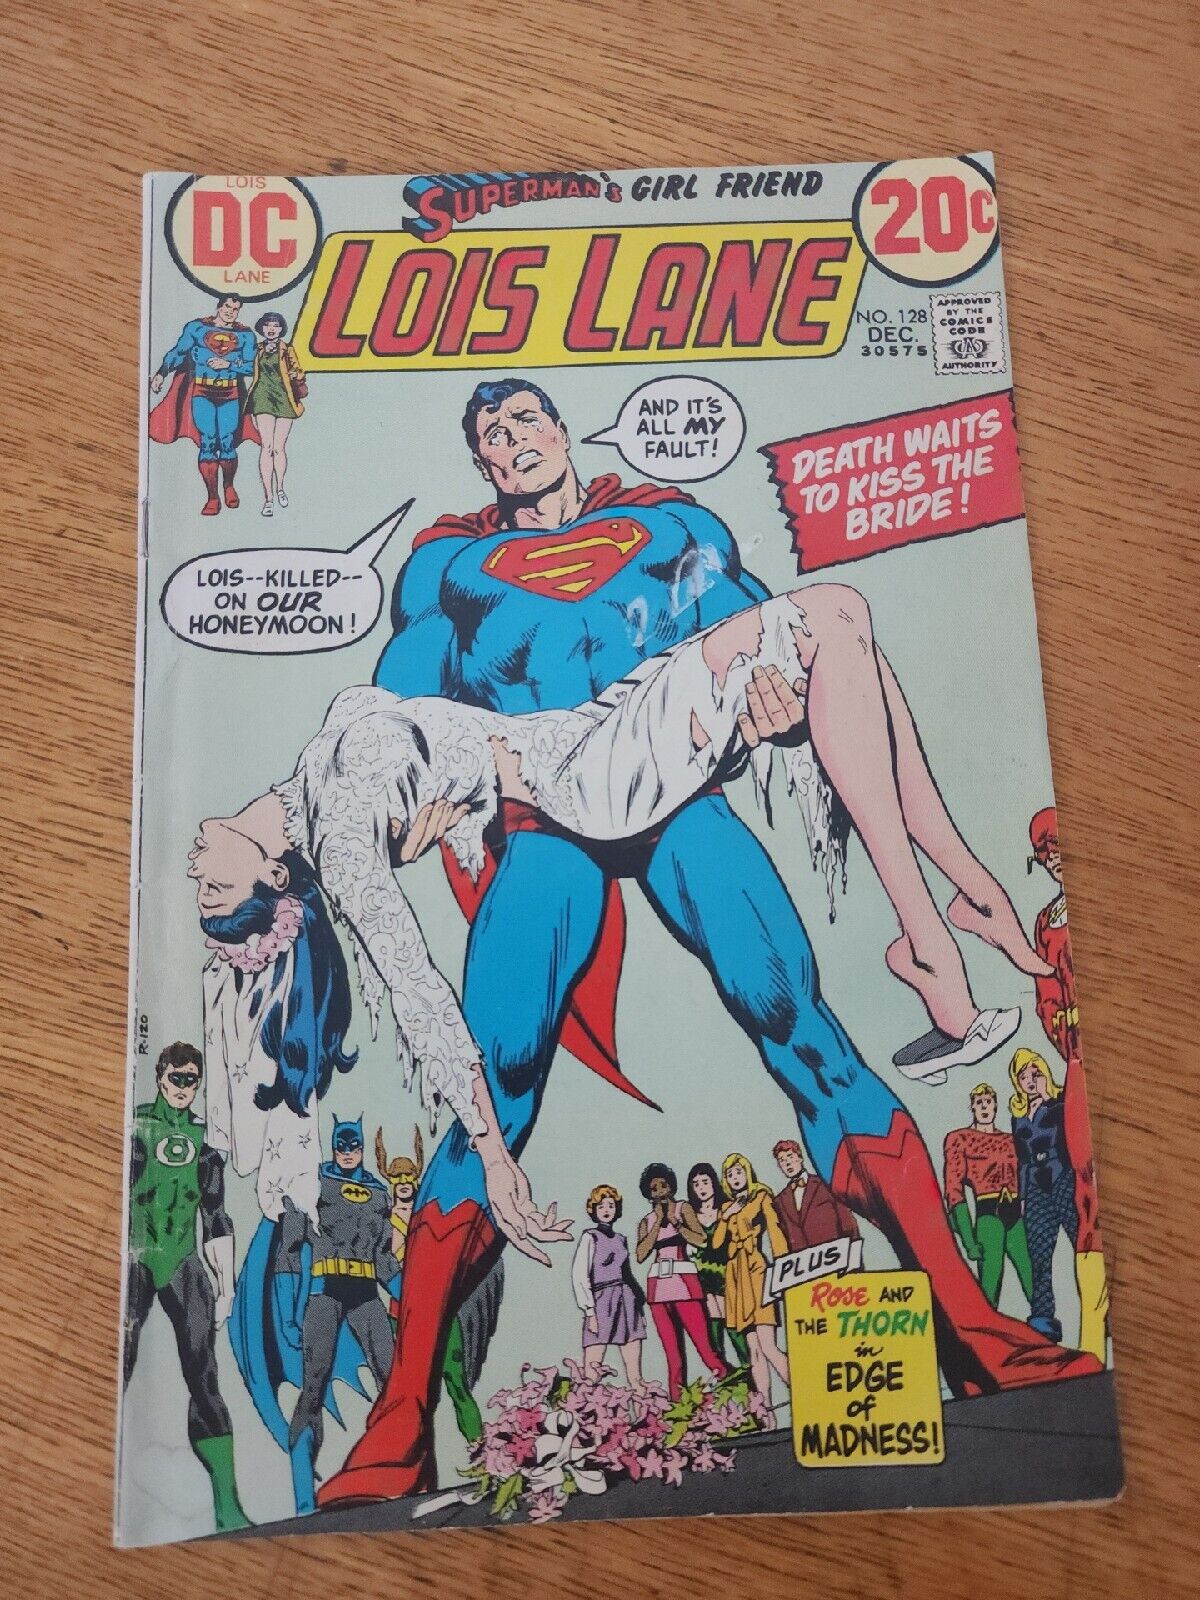 Superman\'s Girl Friend Lois Lane #128 - Vince Colletta Cover Art. 1972